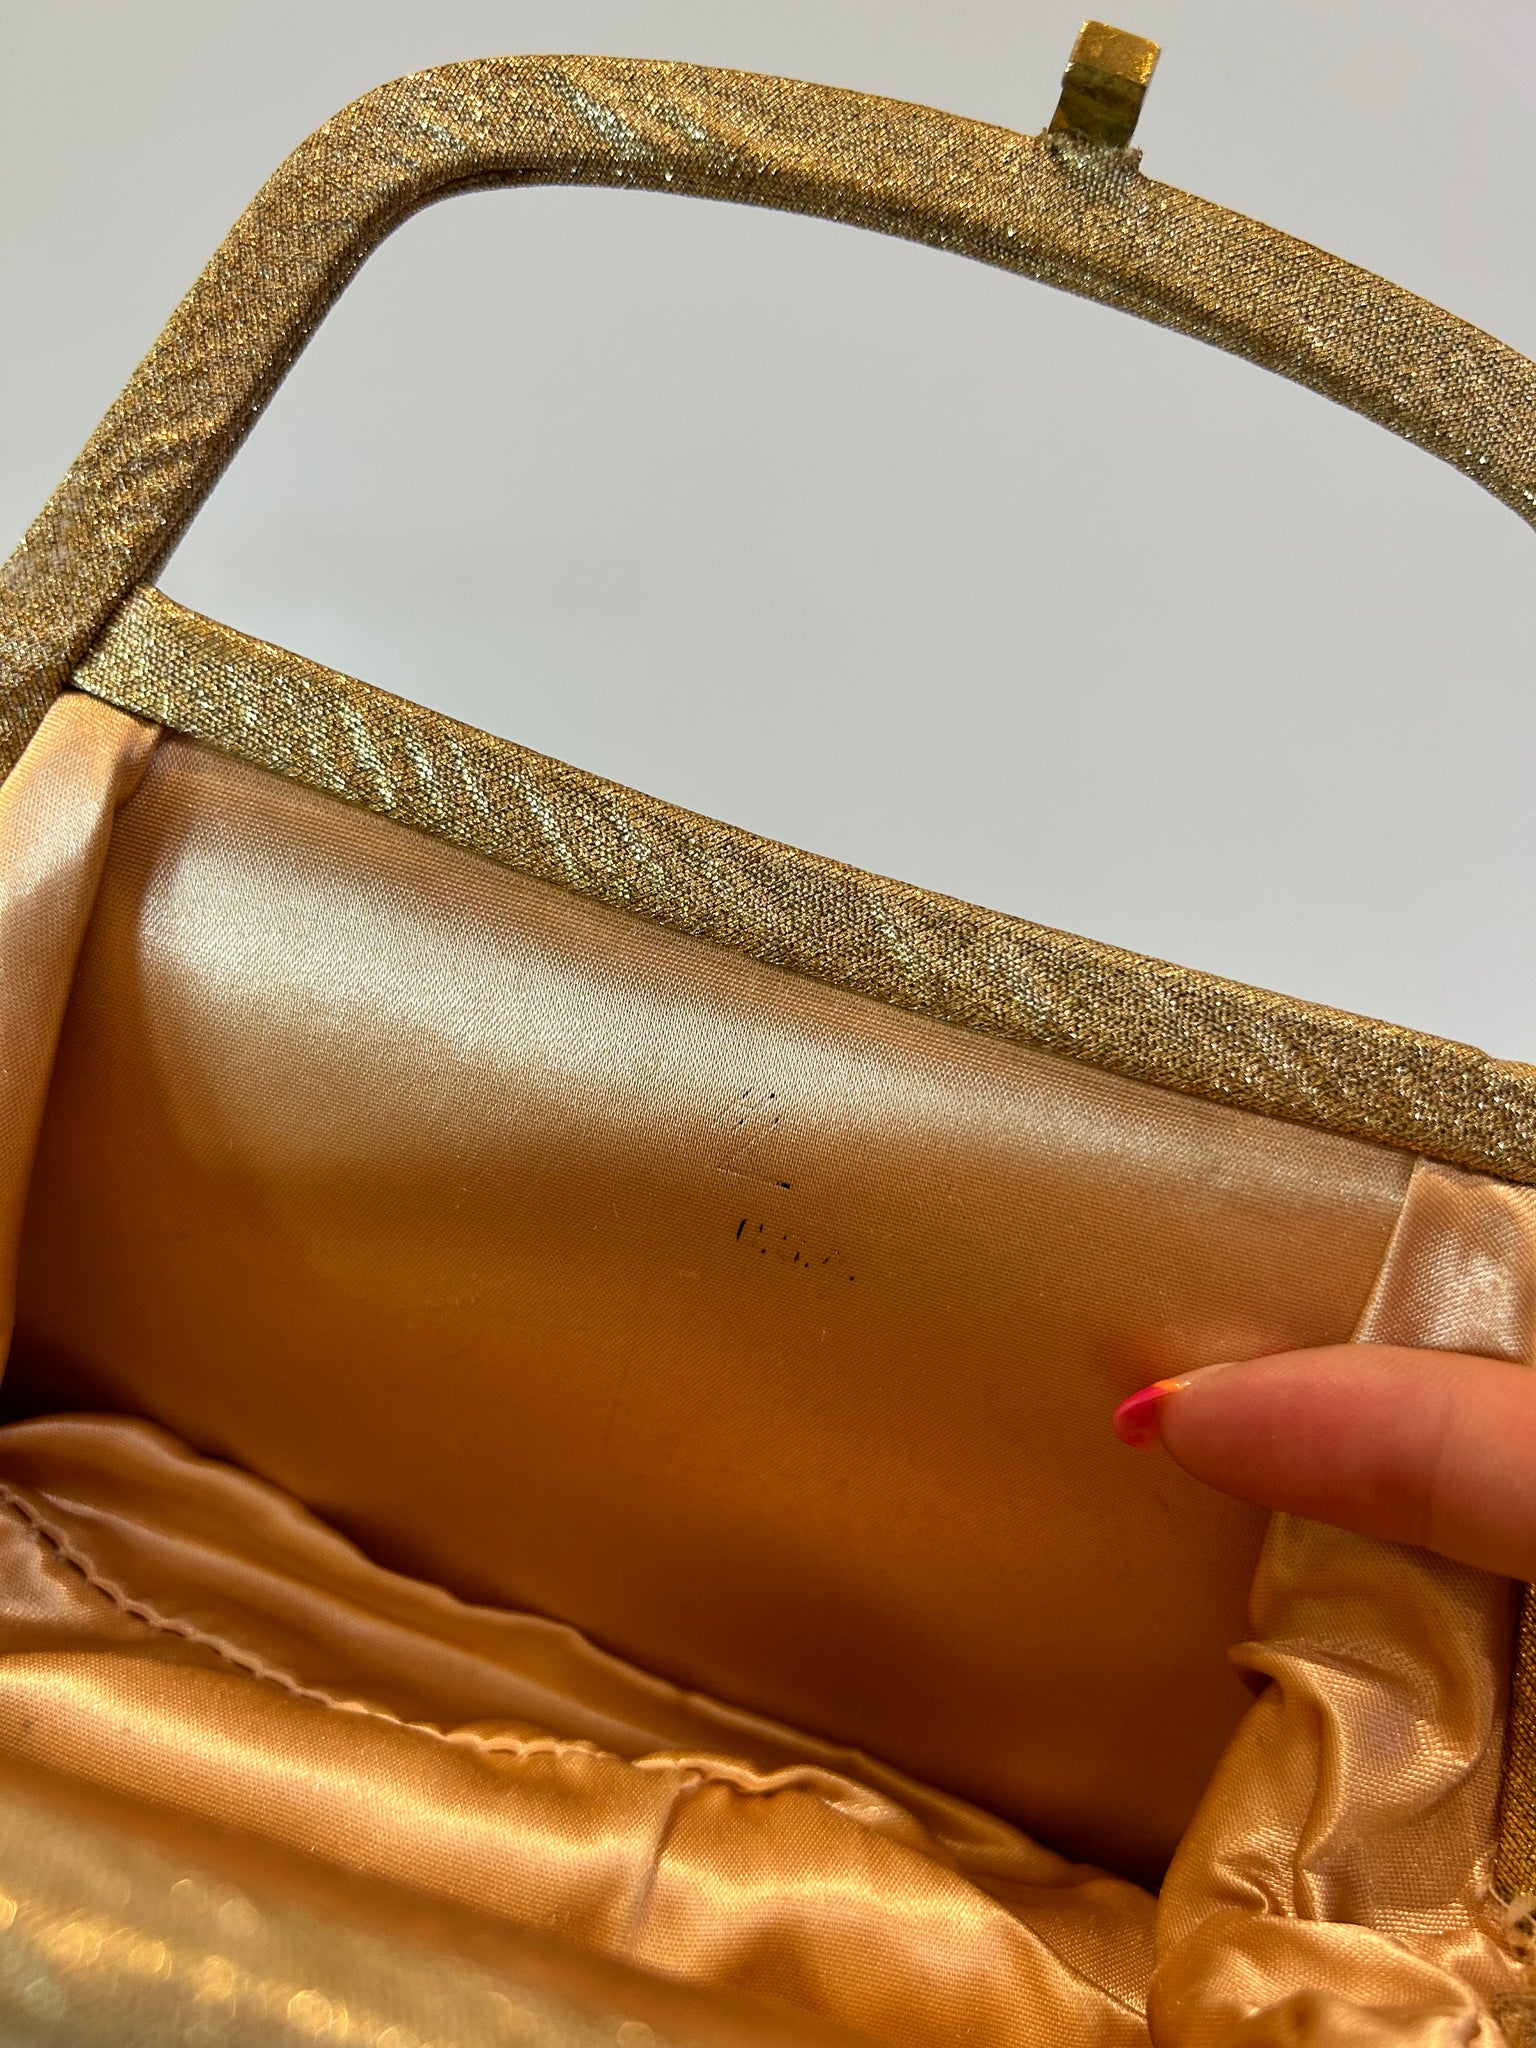 Selection of vintage purses & handbags part 6